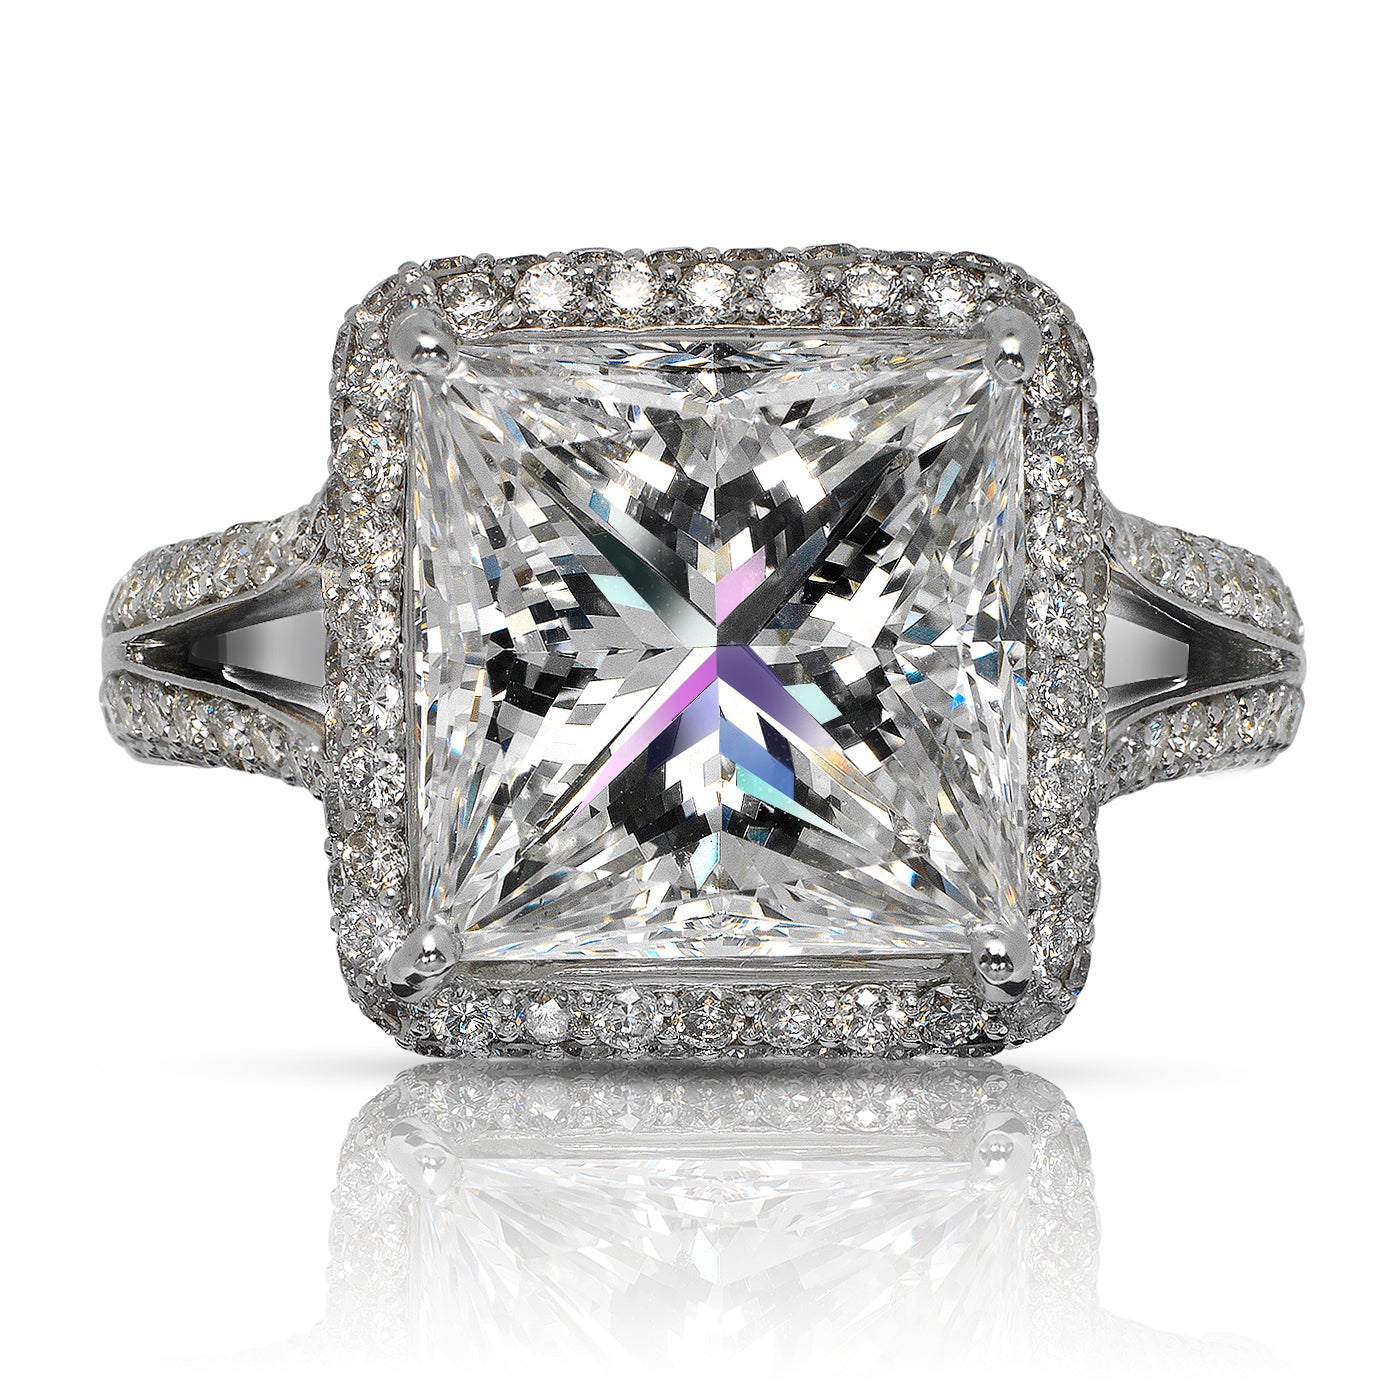 Diamond Ring Princess Cut 7 Carat Halo Ring in 18K White Gold Front View